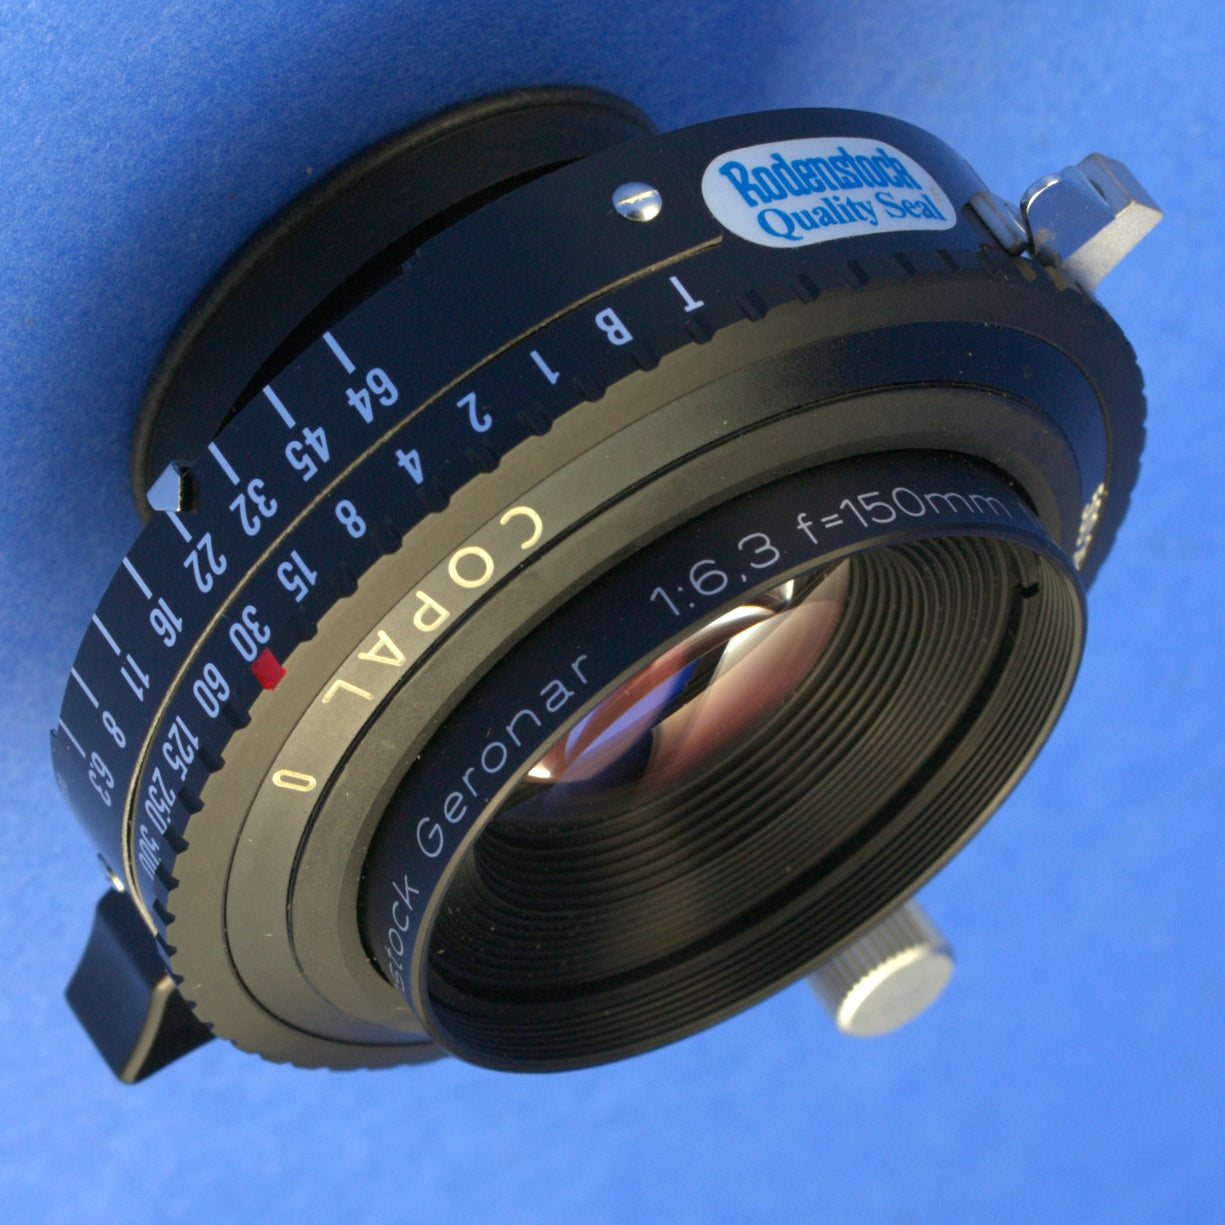 Rodenstock Geronar 150mm 6.3 MC Large Format Lens in Copal 0 Shutter Mint